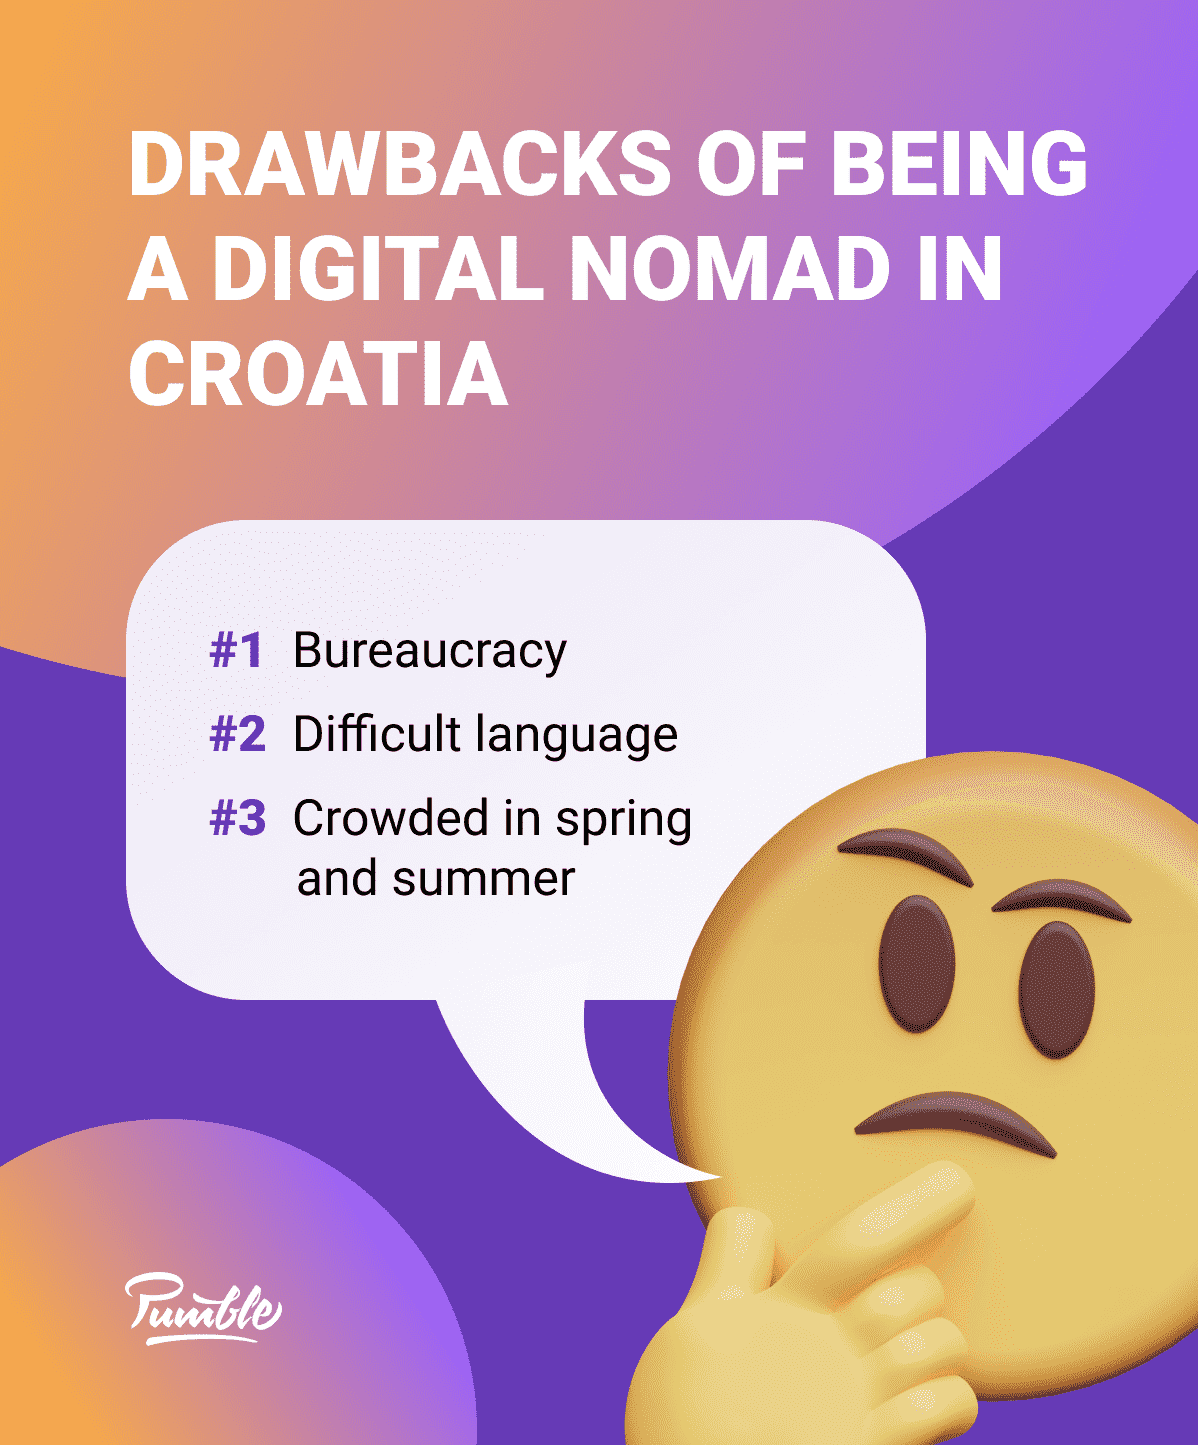 Drawbacks of being a digital nomad in Croatia